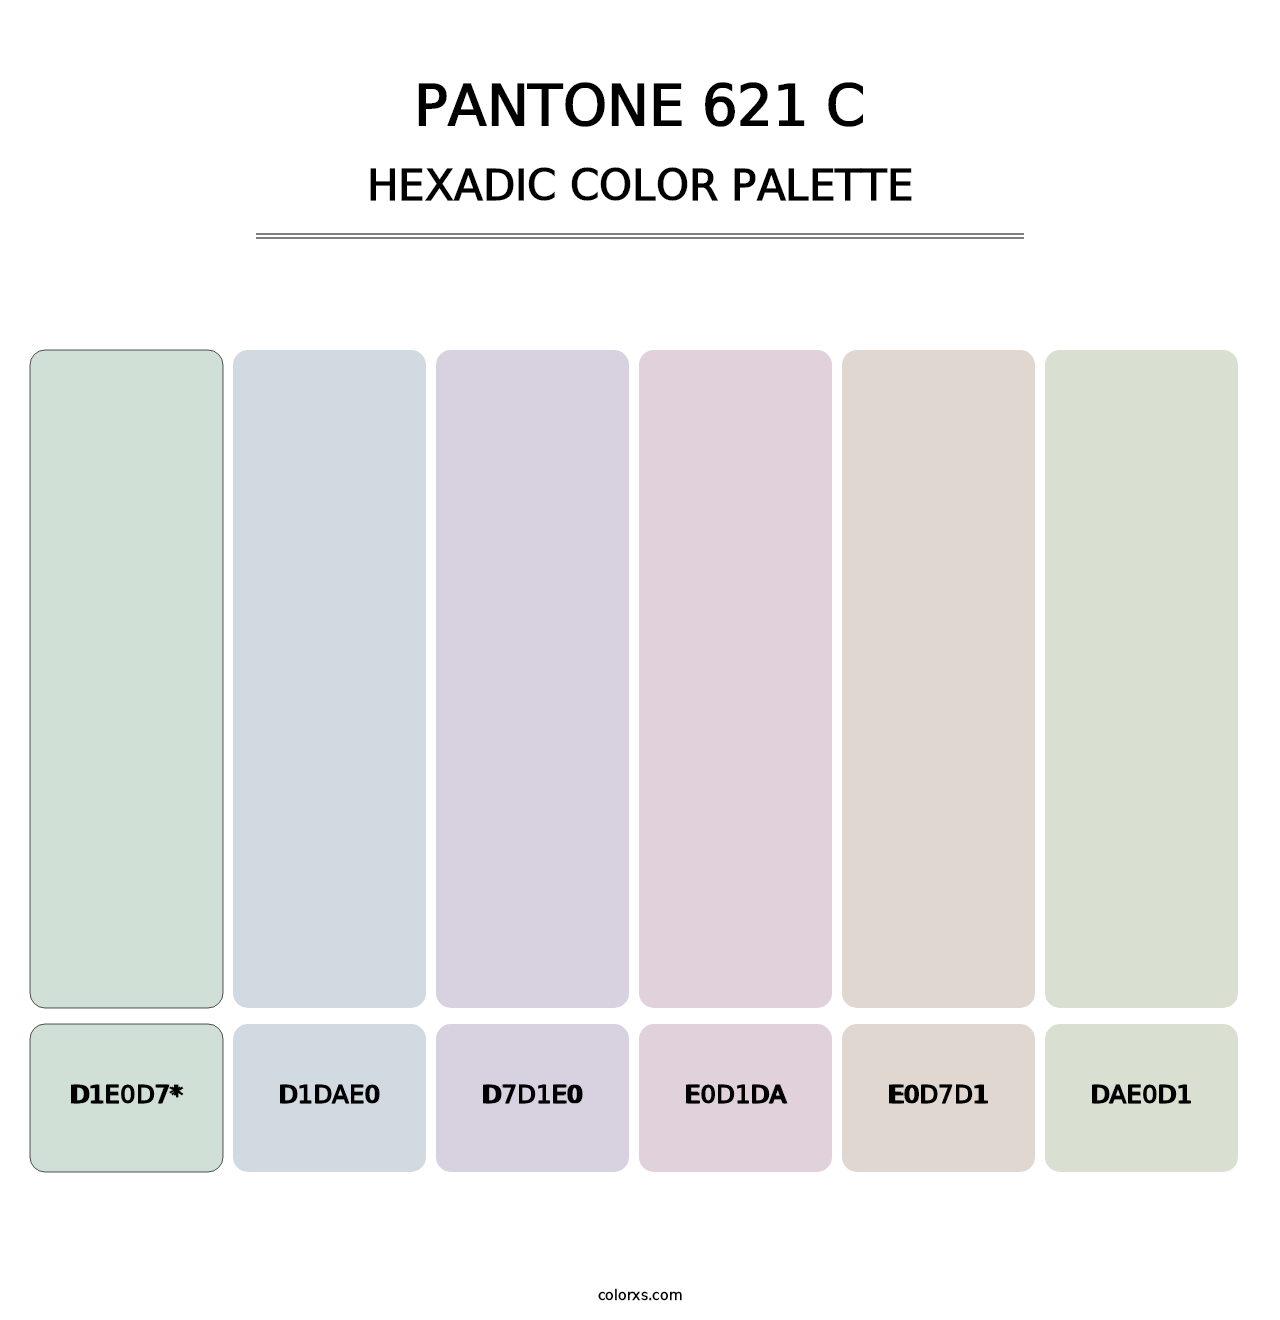 PANTONE 621 C - Hexadic Color Palette